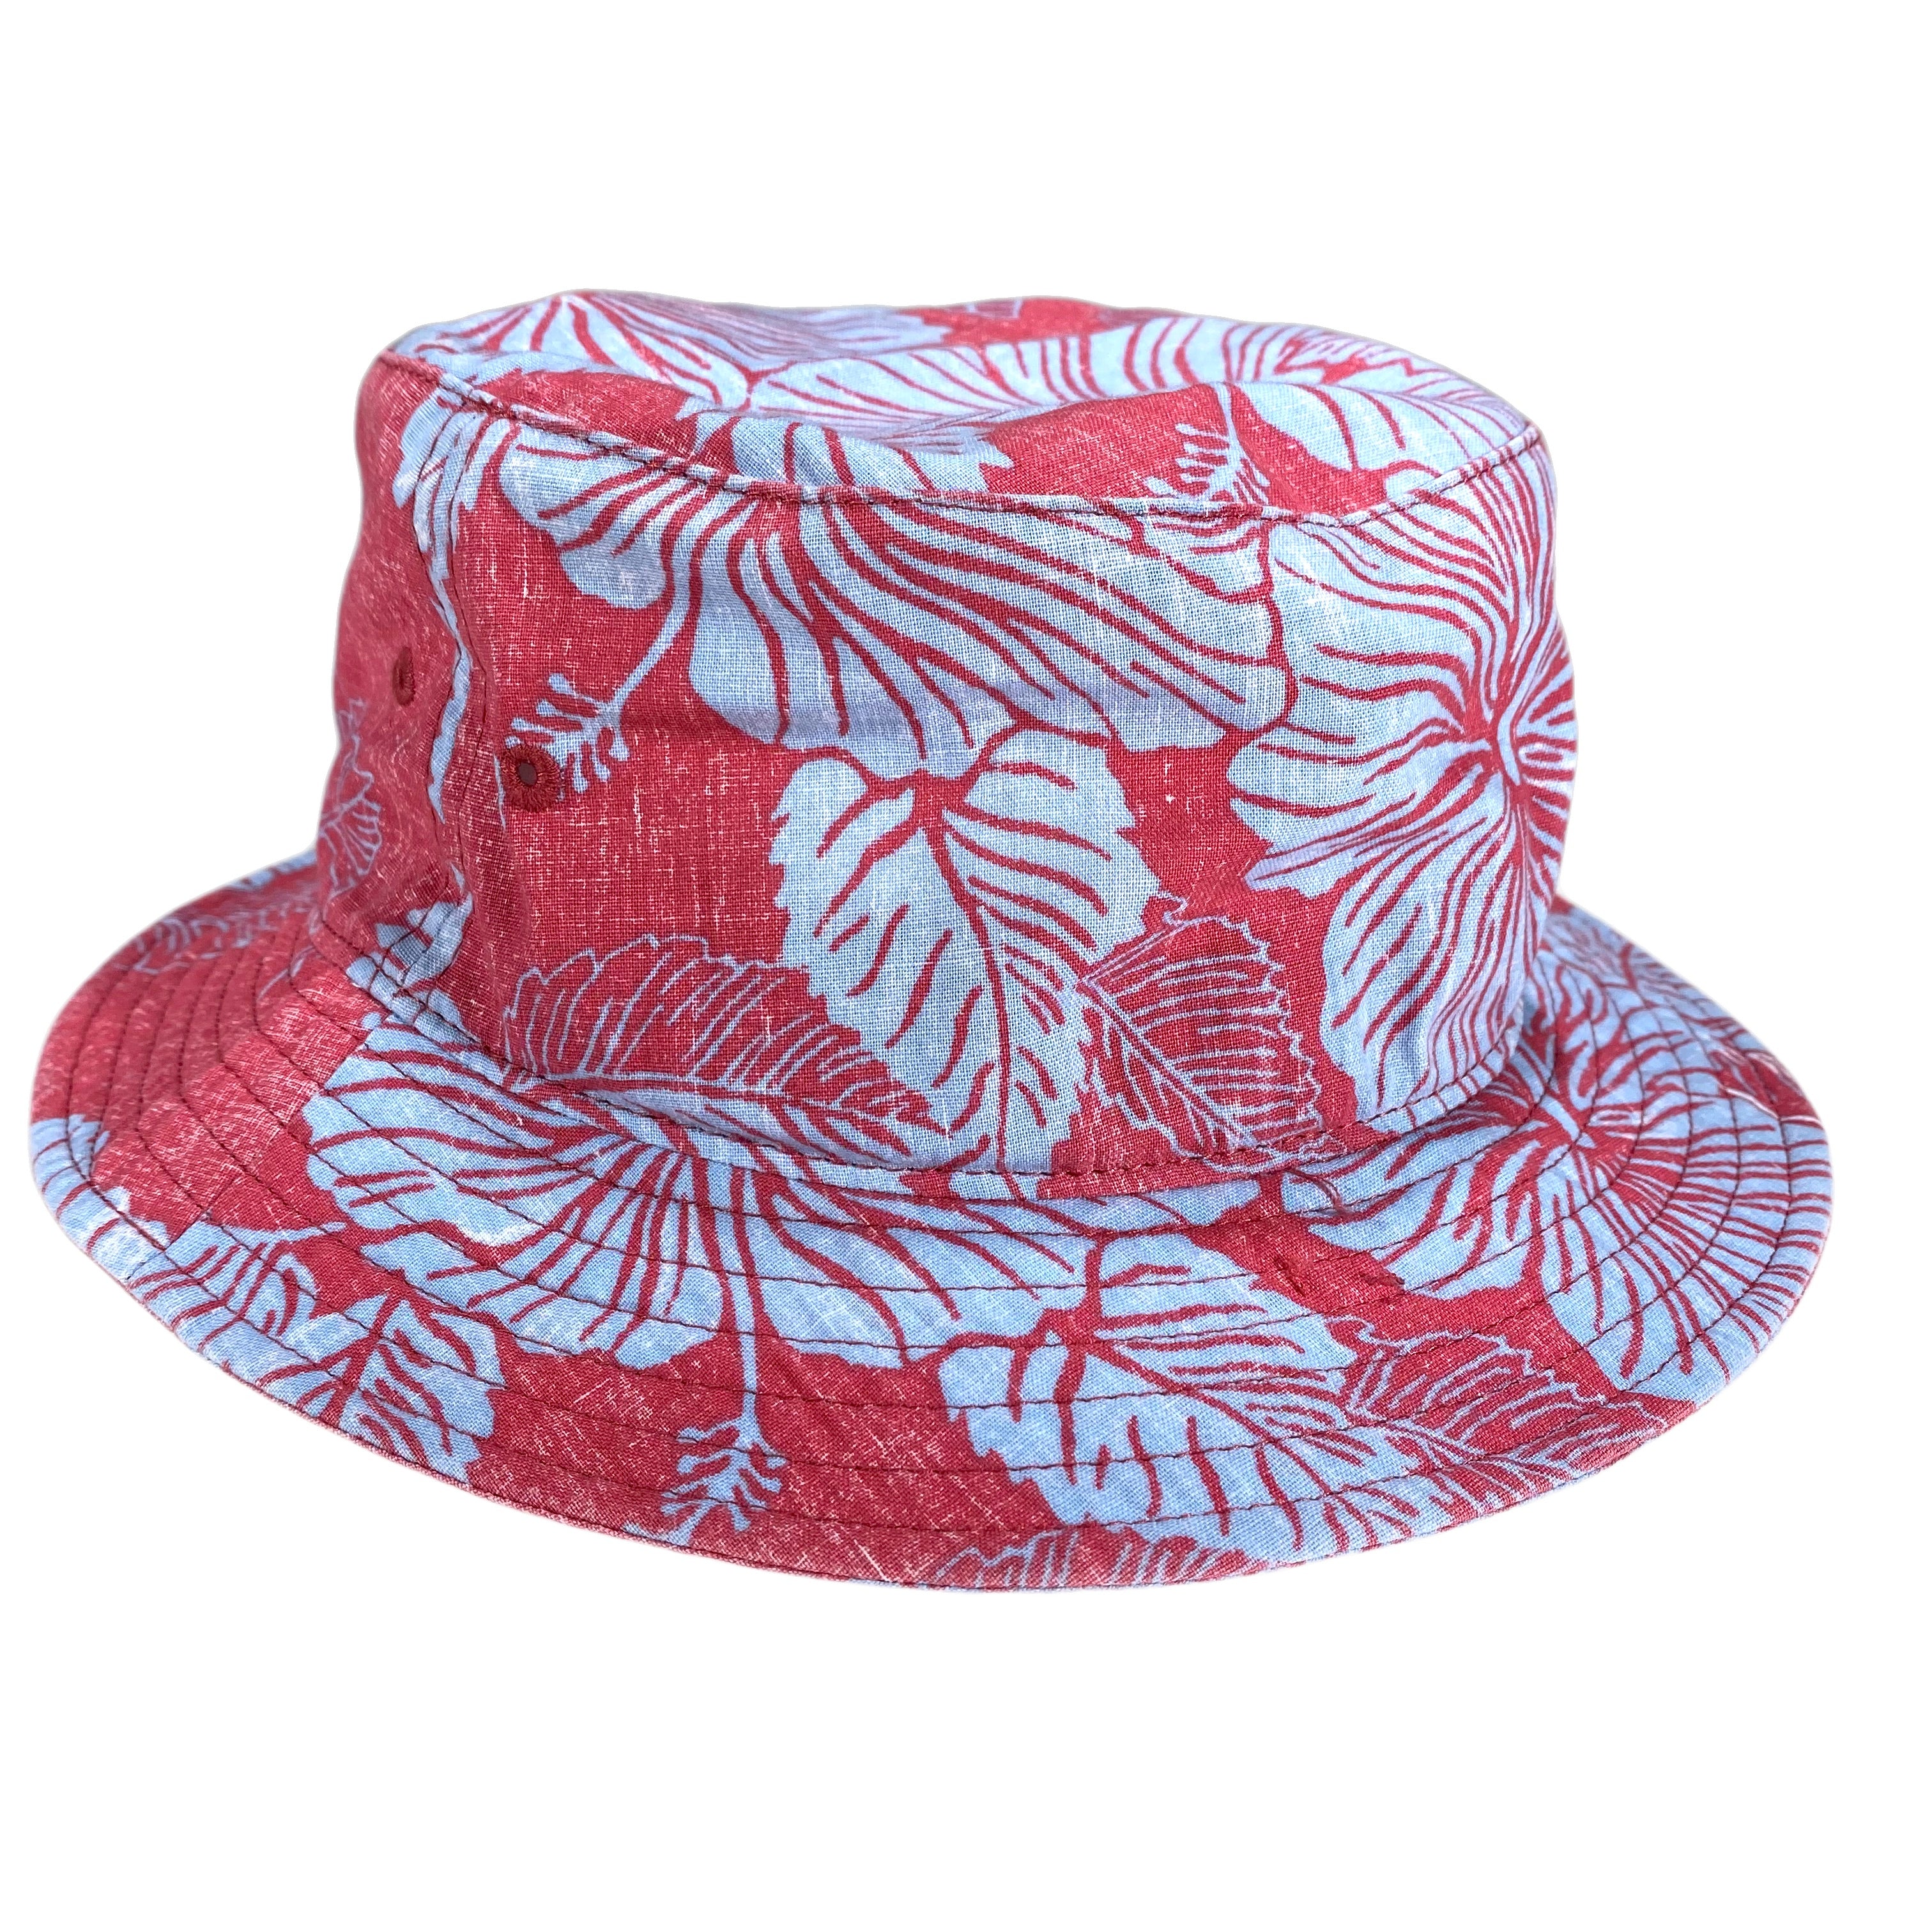 Aloha Biscus Bucket Hat by Reyn Spooner Vintage Red S/M  805766146692